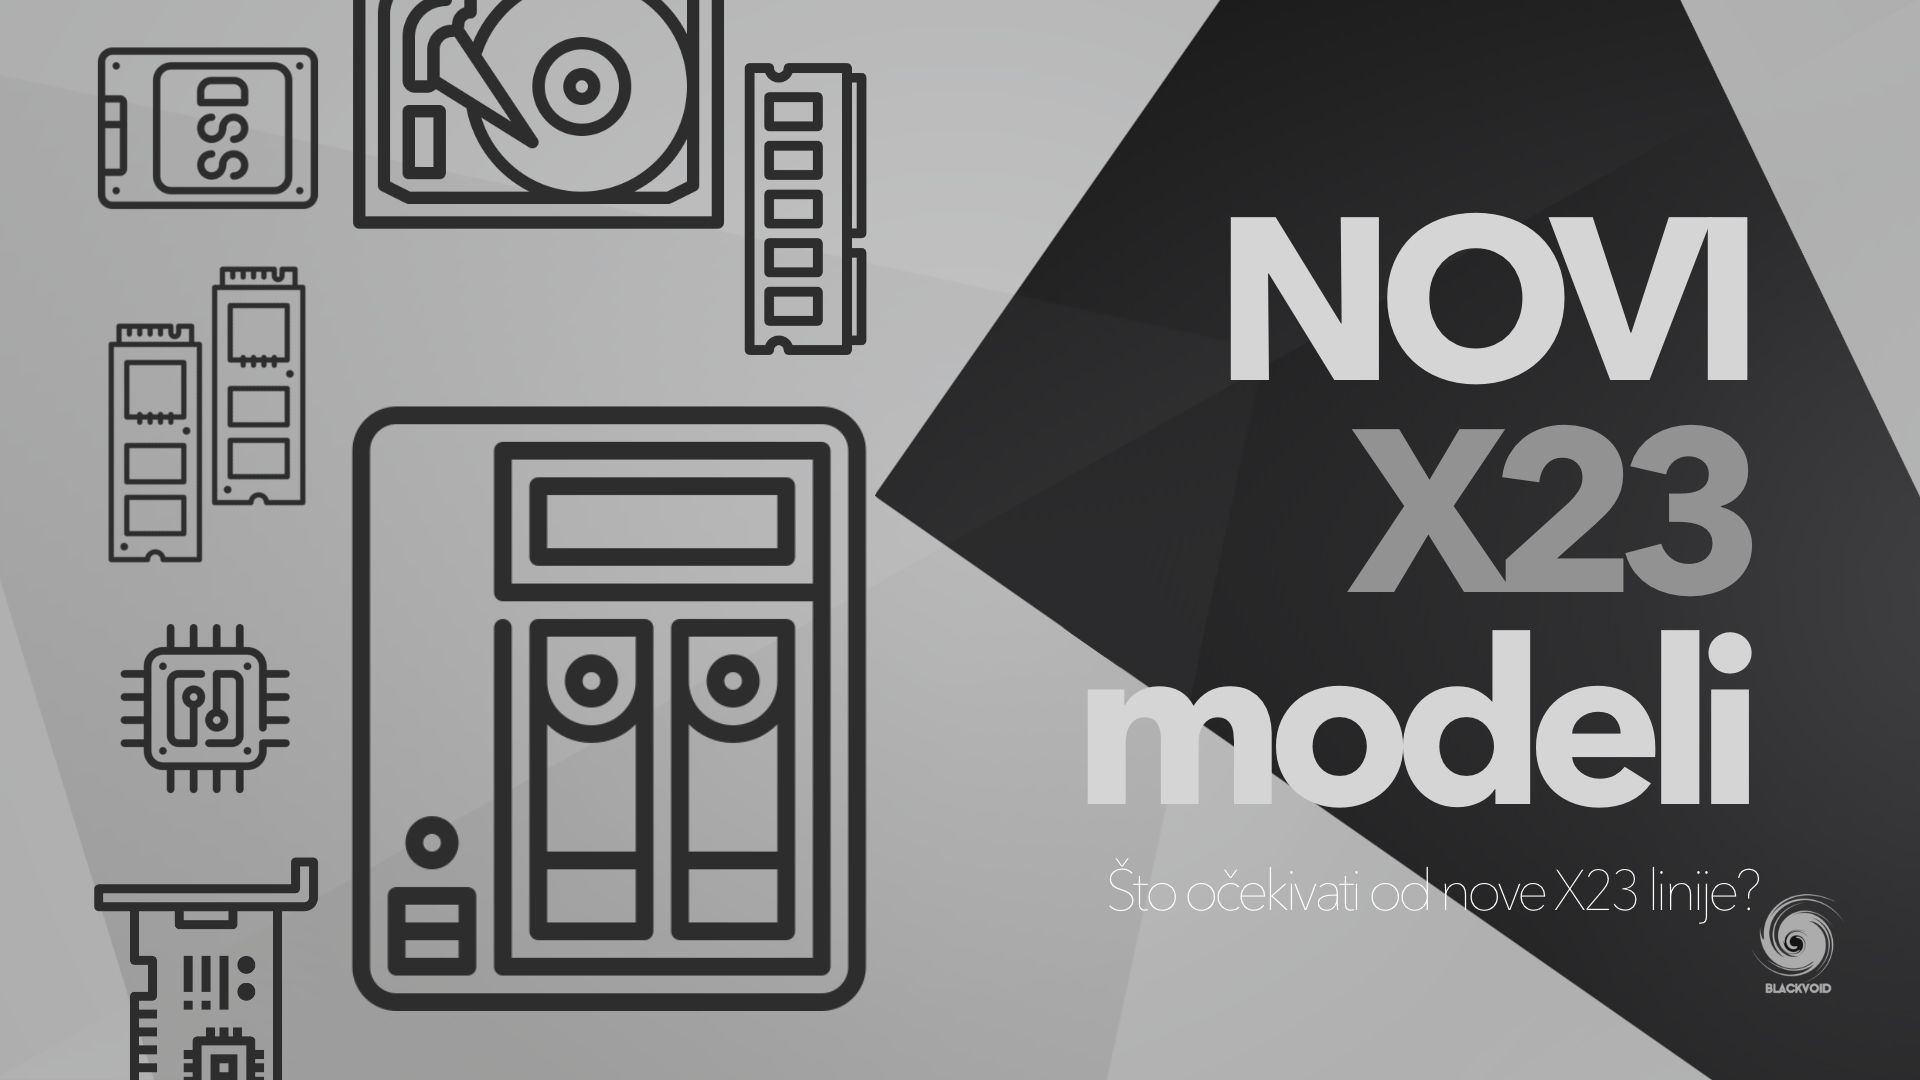 NOVI x23 Synology modeli